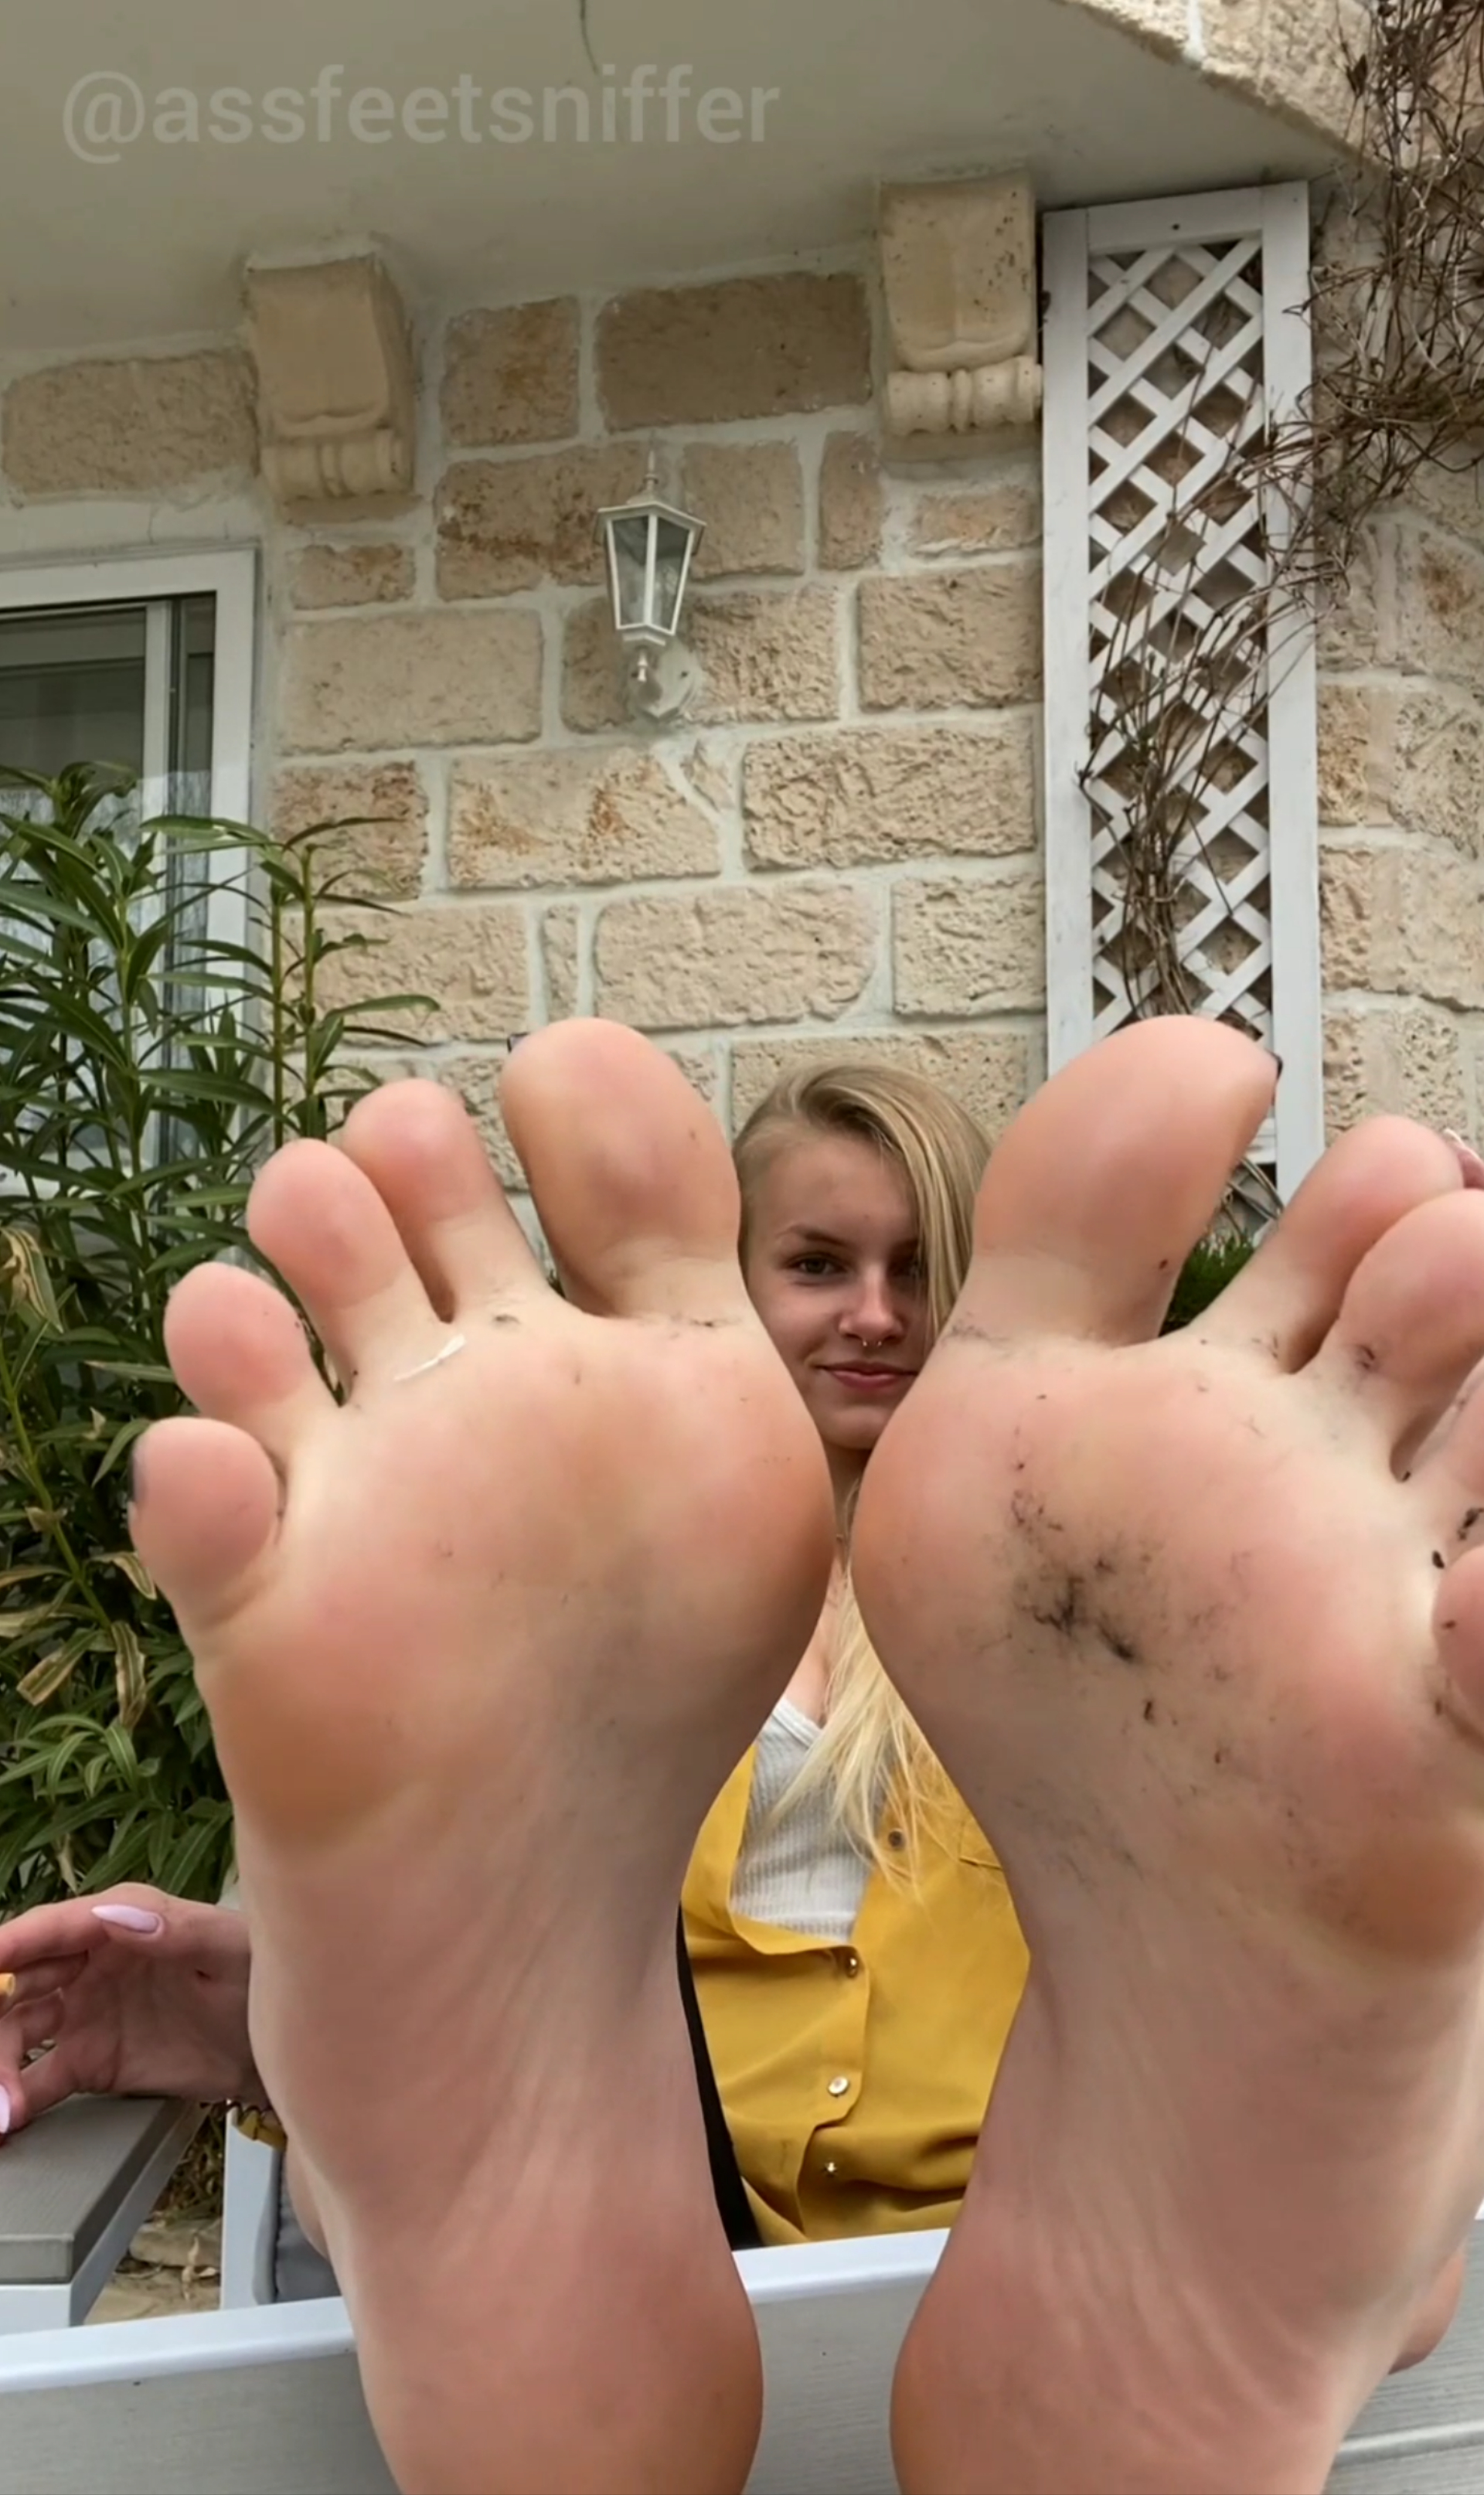 Blonde Girl Stinky Feet And Dirty Socks - ThisVid.com